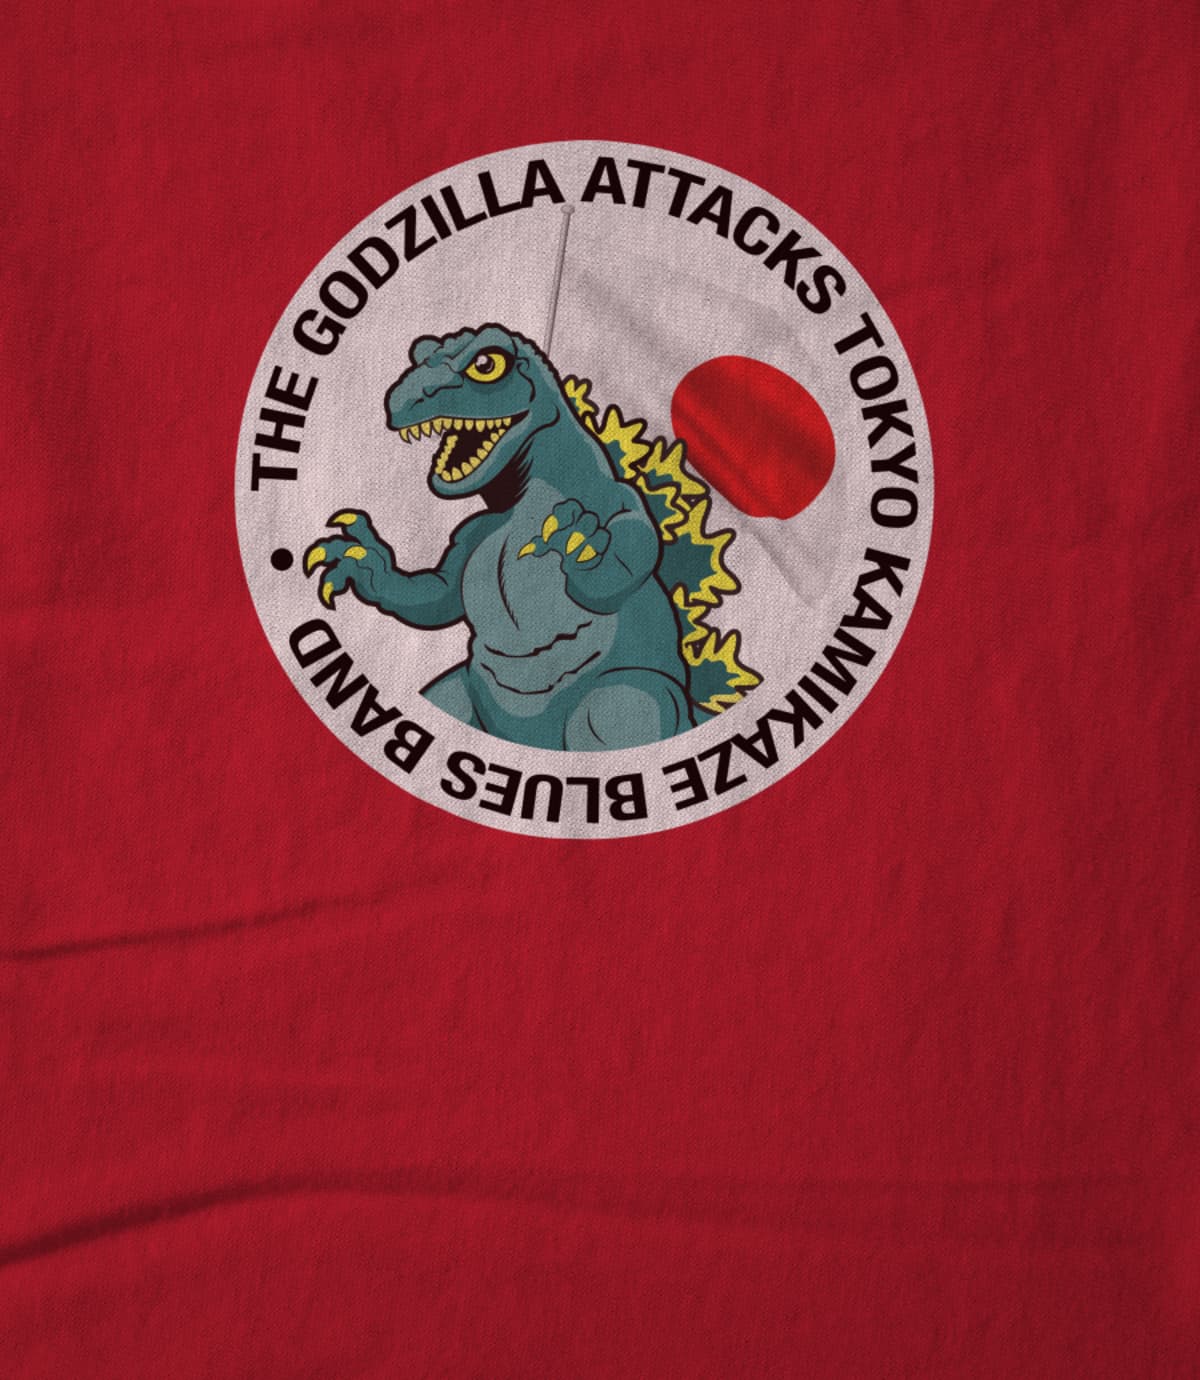 The godzilla attacks tokyo kamikaze blues band  logo shirt   red 1612117875